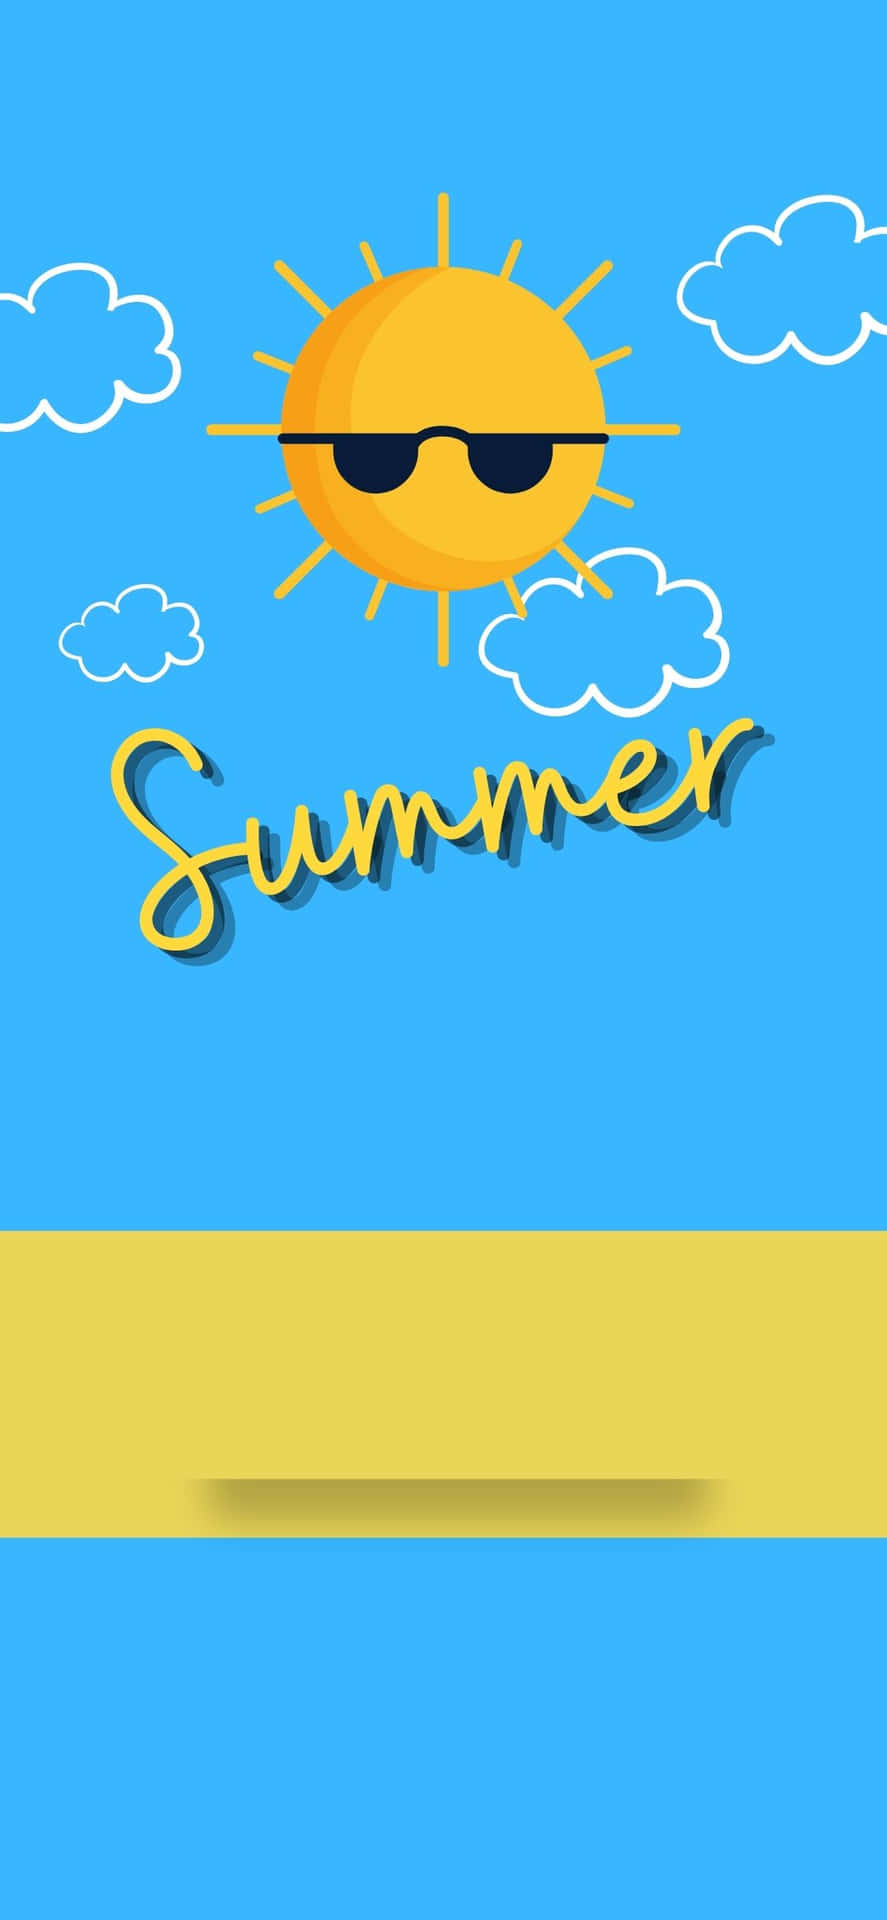 Sun Wearing Sunglasses iPhone X Summer Background